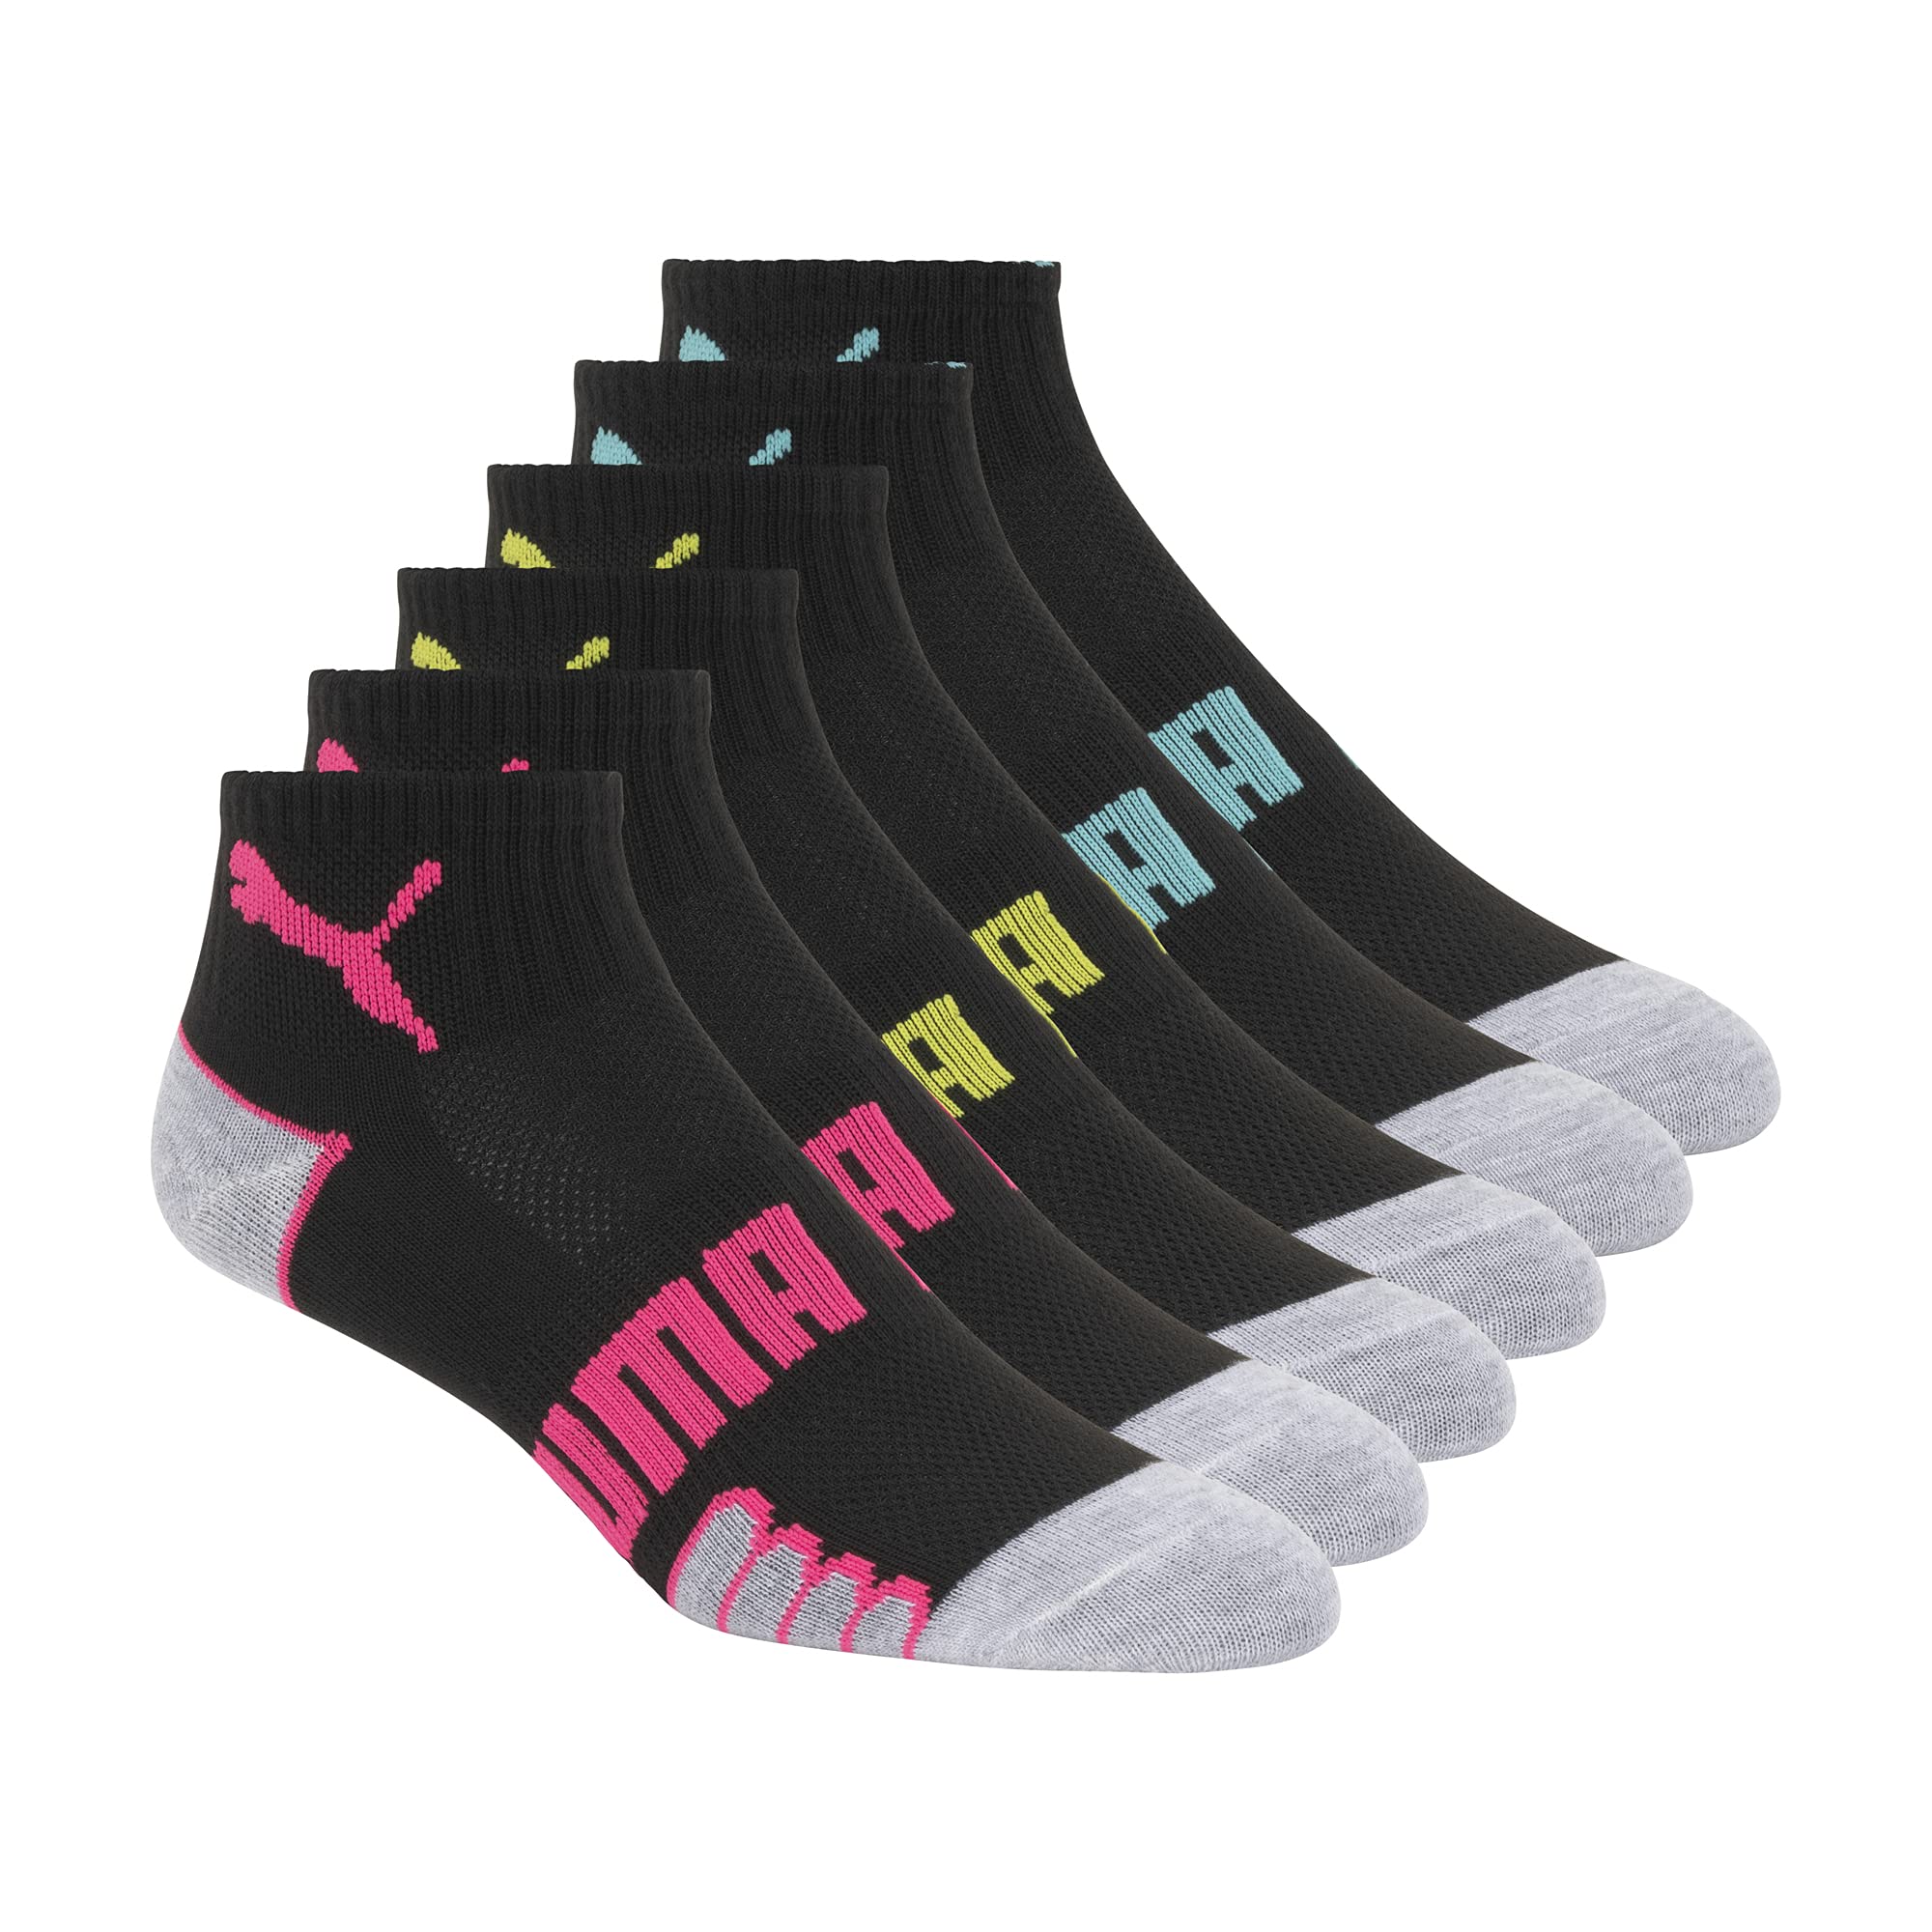 6-Pack PUMA Women's Quarter Crew Socks (Black) $8.91 + Free Shipping w/ Prime or on $25+